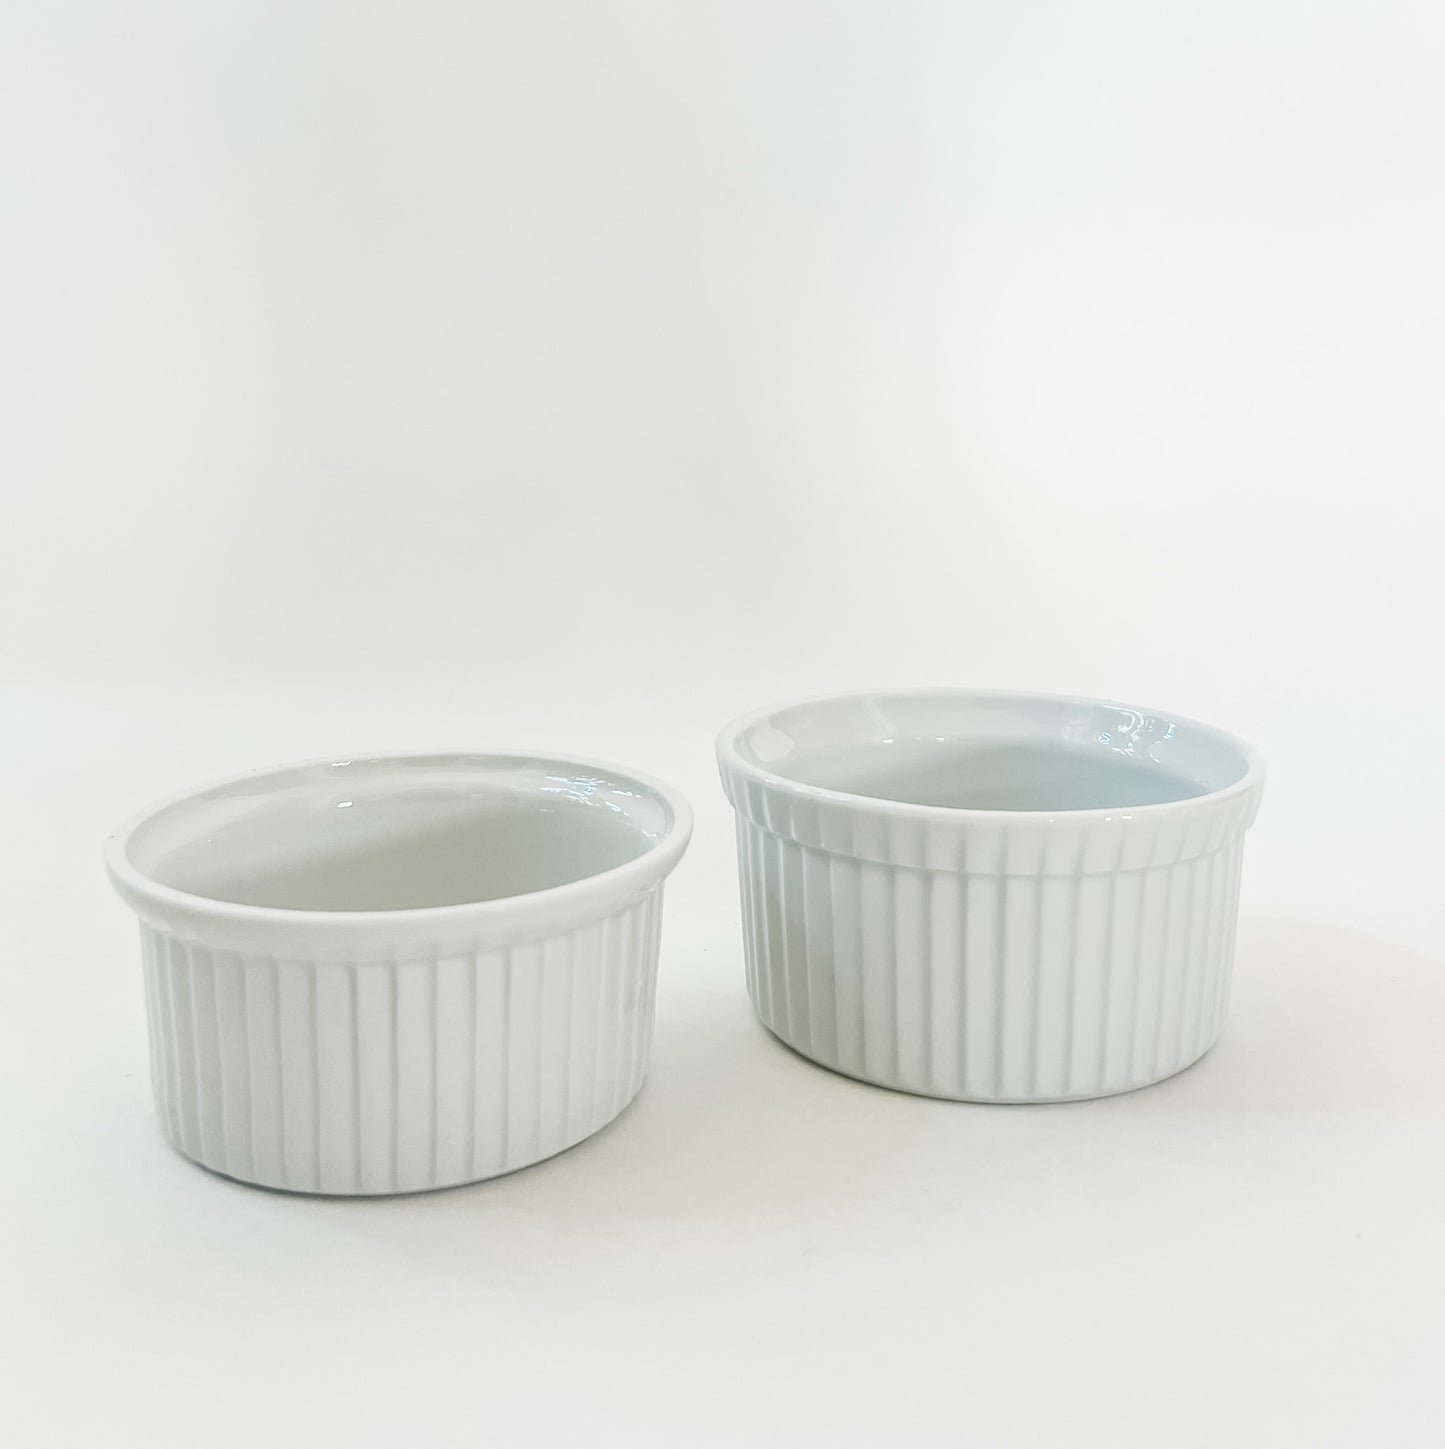 French Apilco Porcelain Ramekins (set of 2)